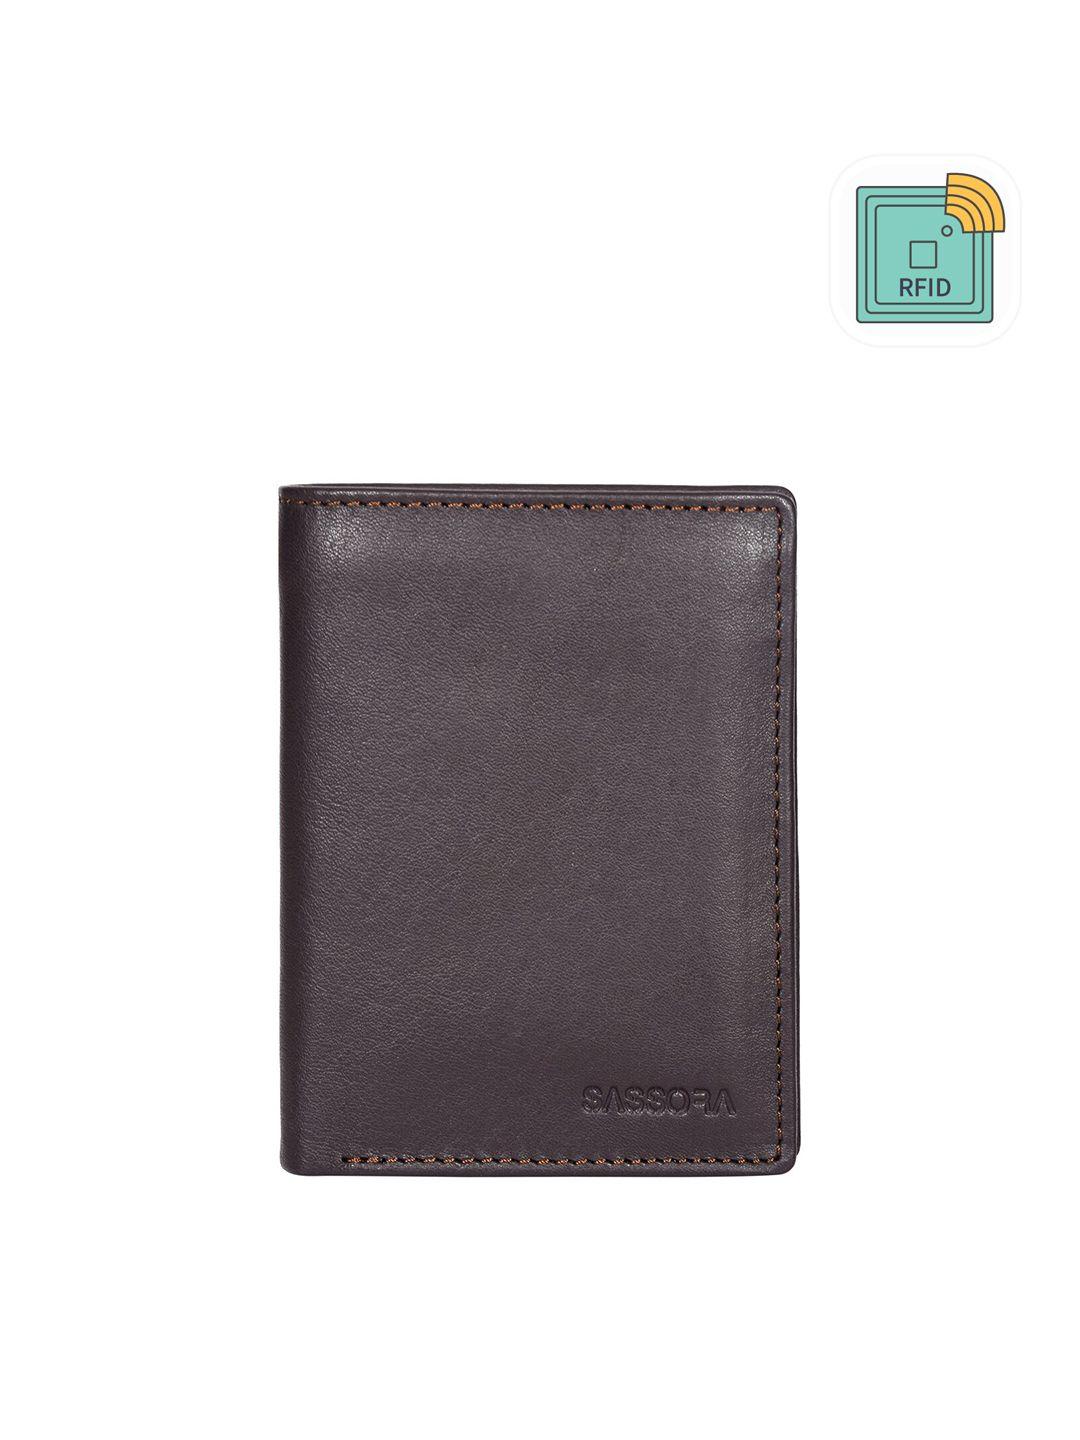 sassora rfid leather two fold wallet